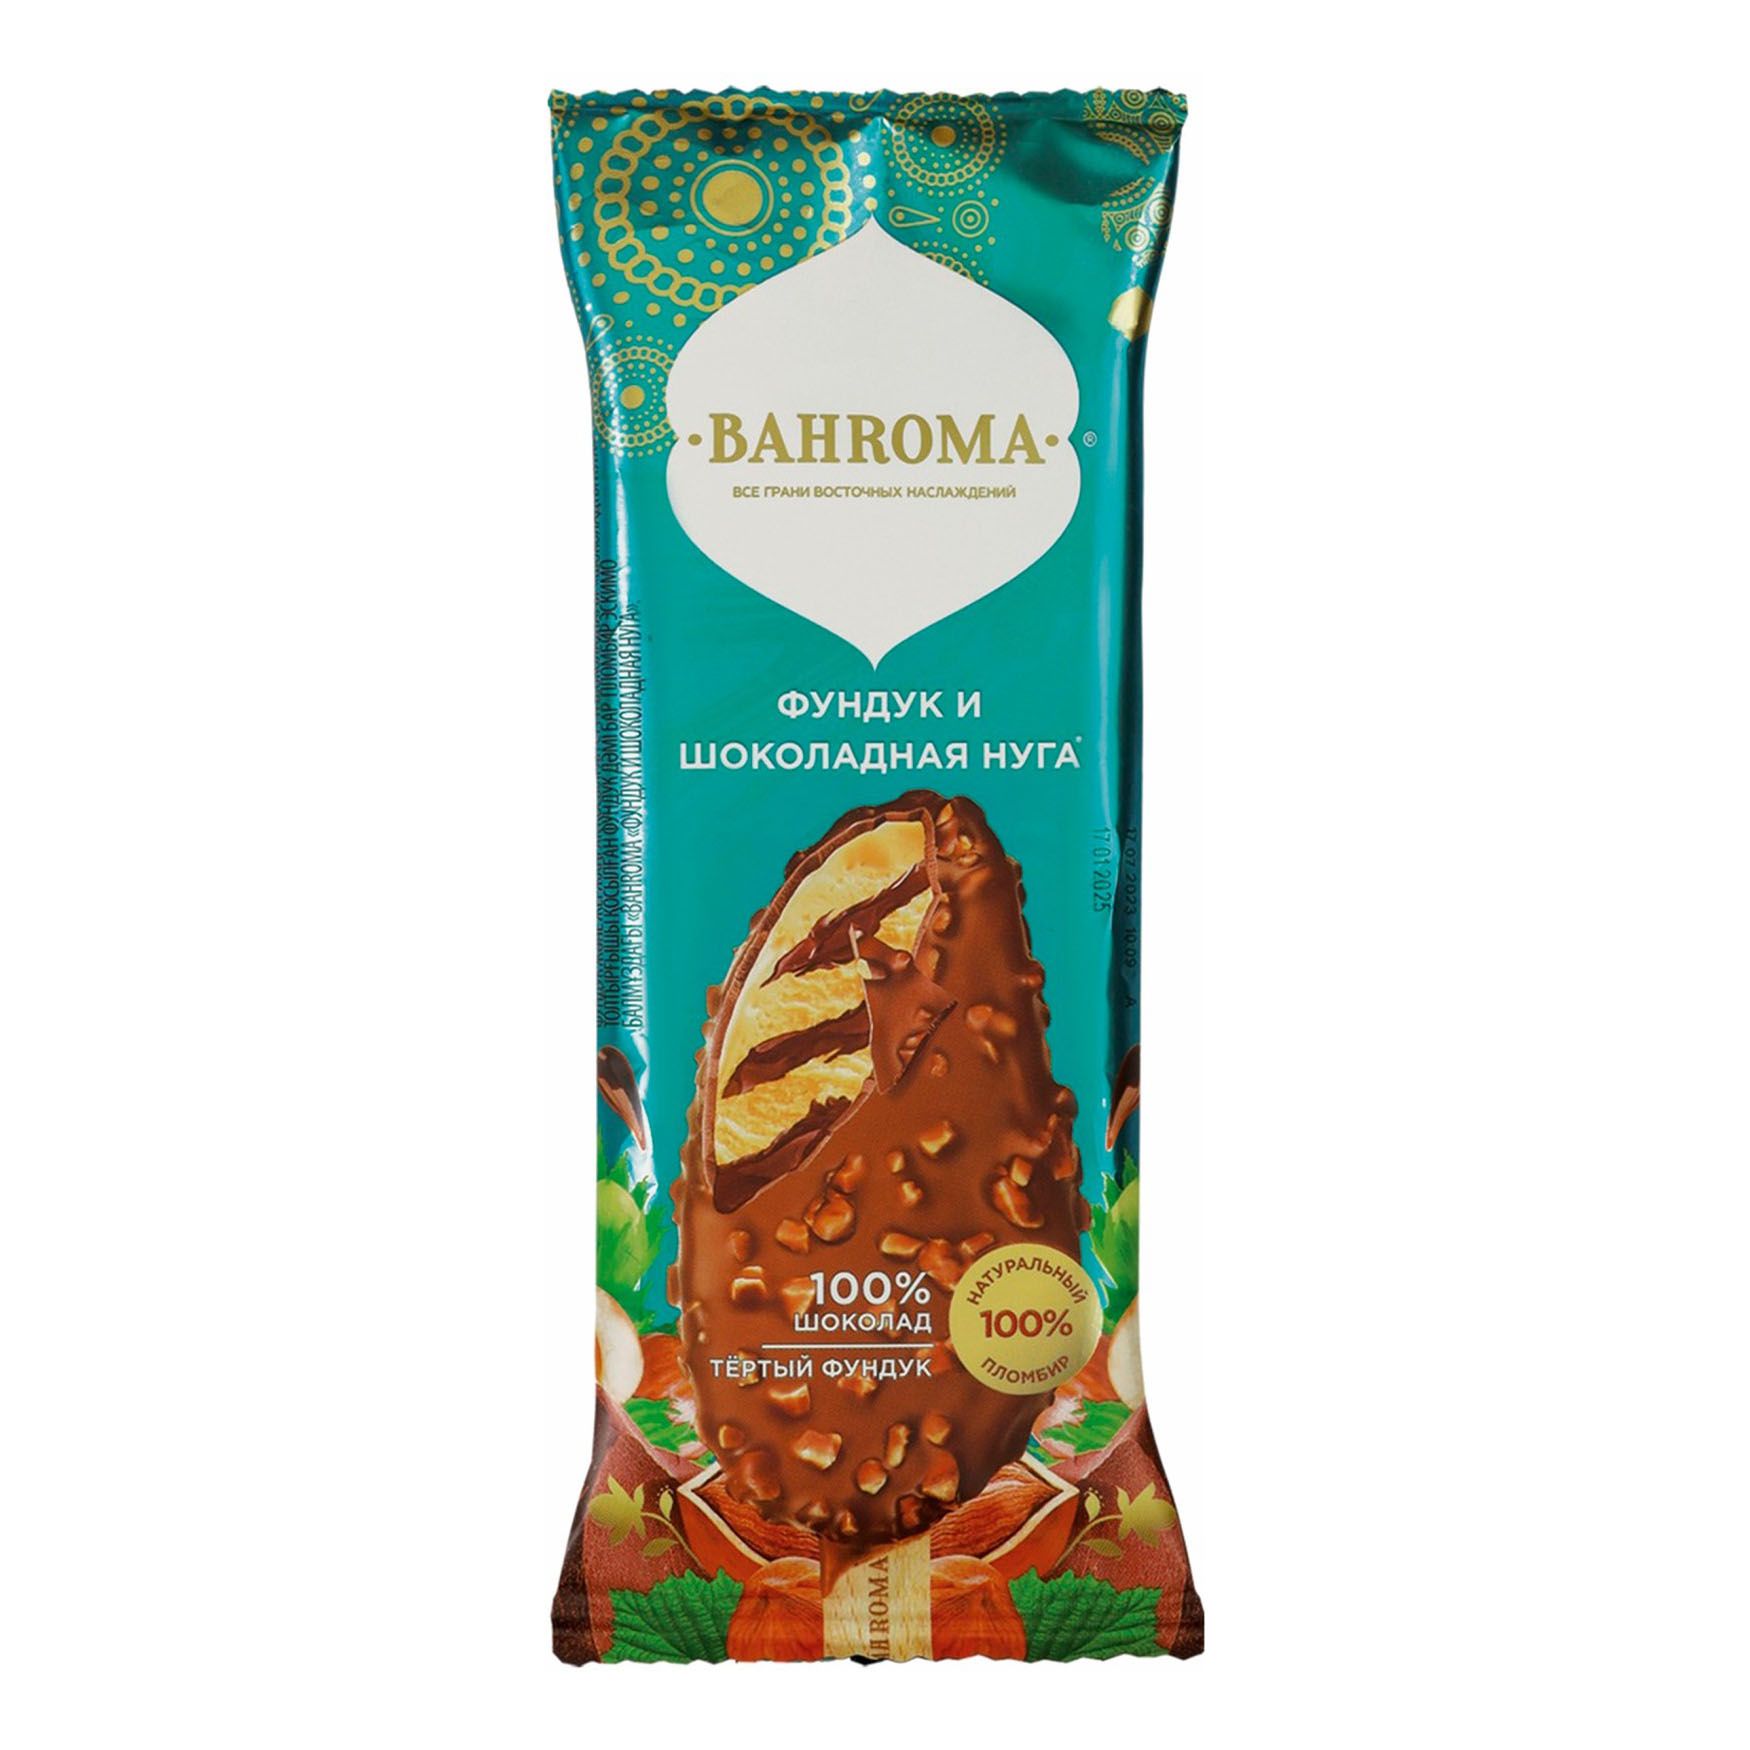 Мороженое пломбир Bahroma фундук-шоколадная нуга БЗМЖ 70 г